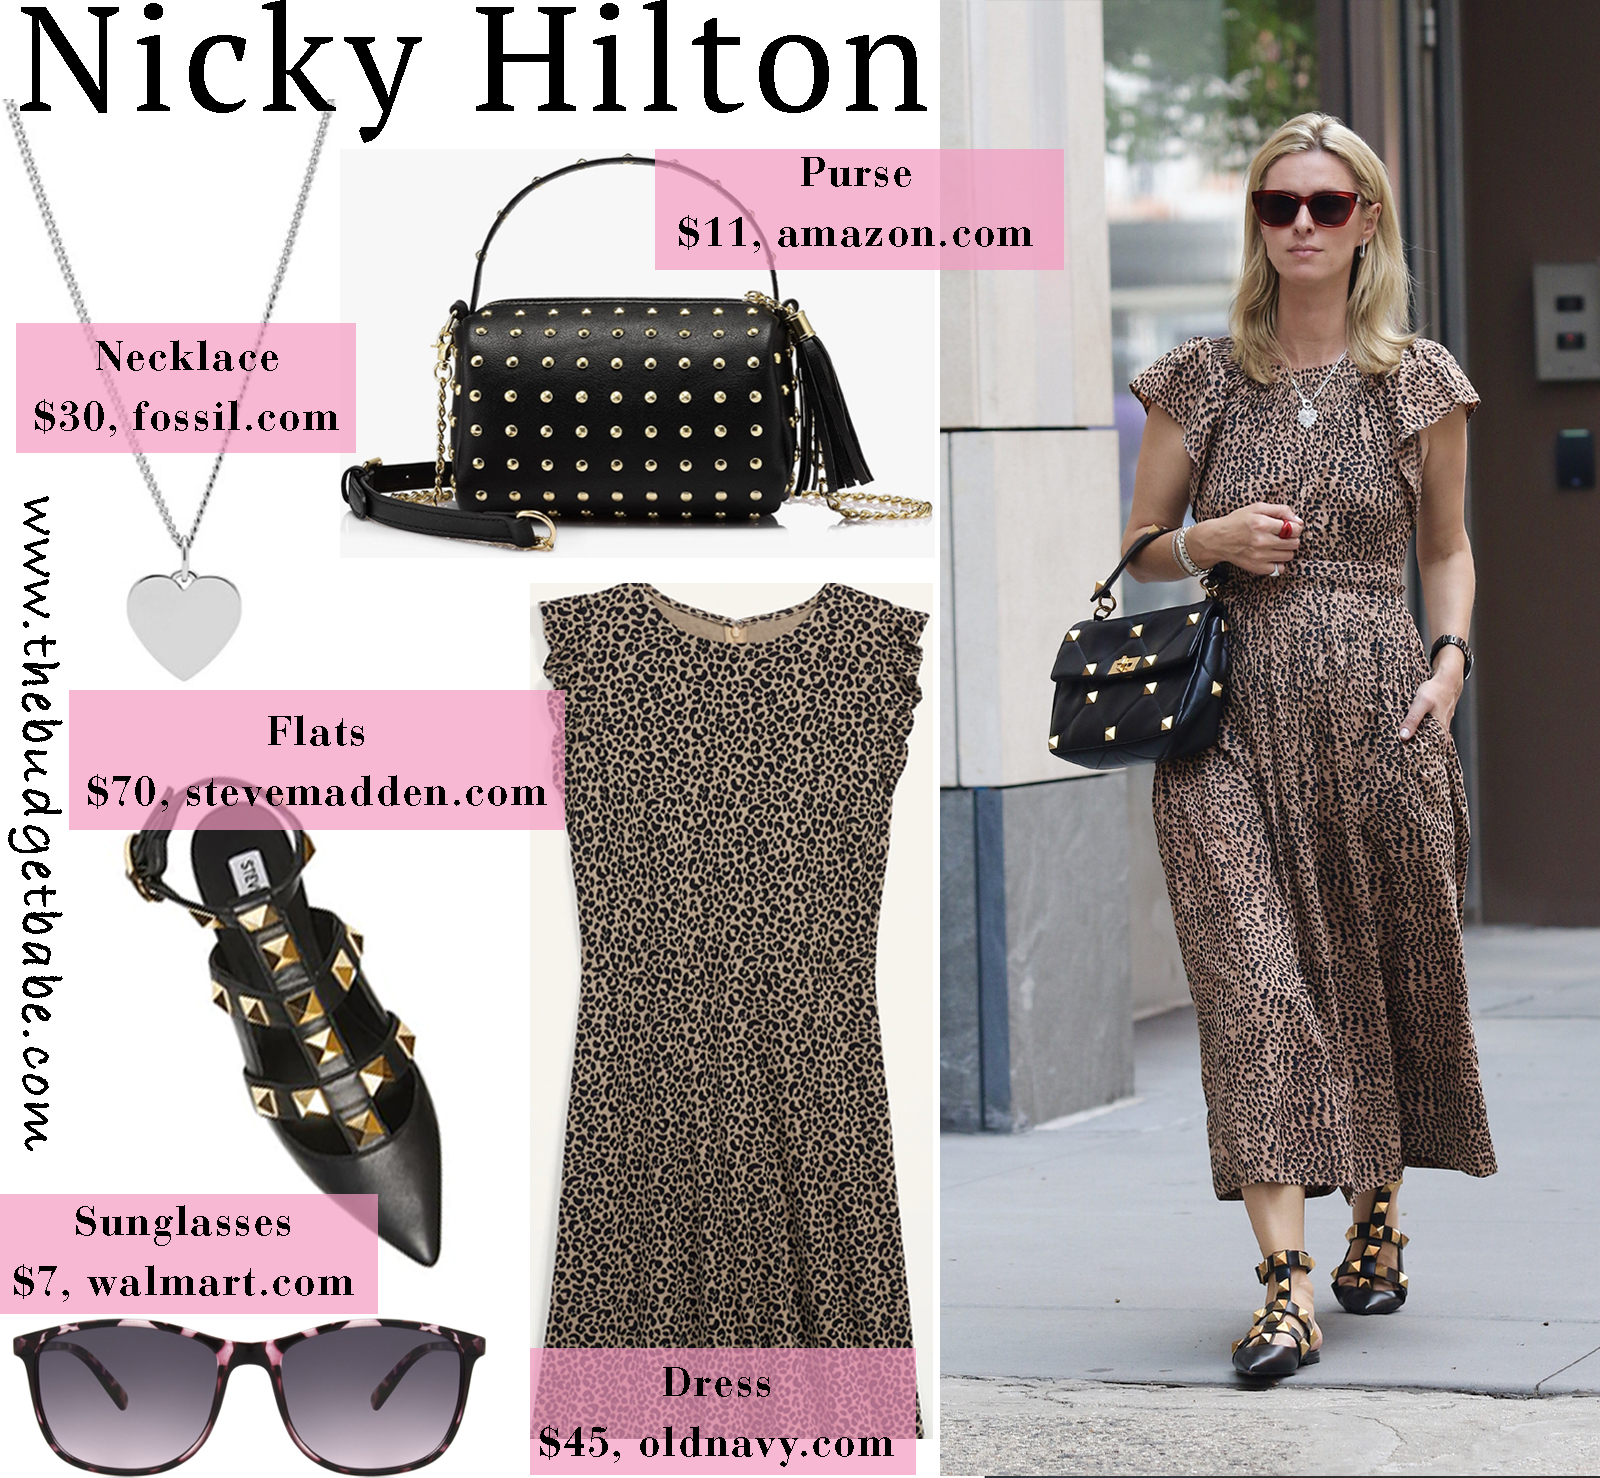 Nicky looks stylish in leopard!